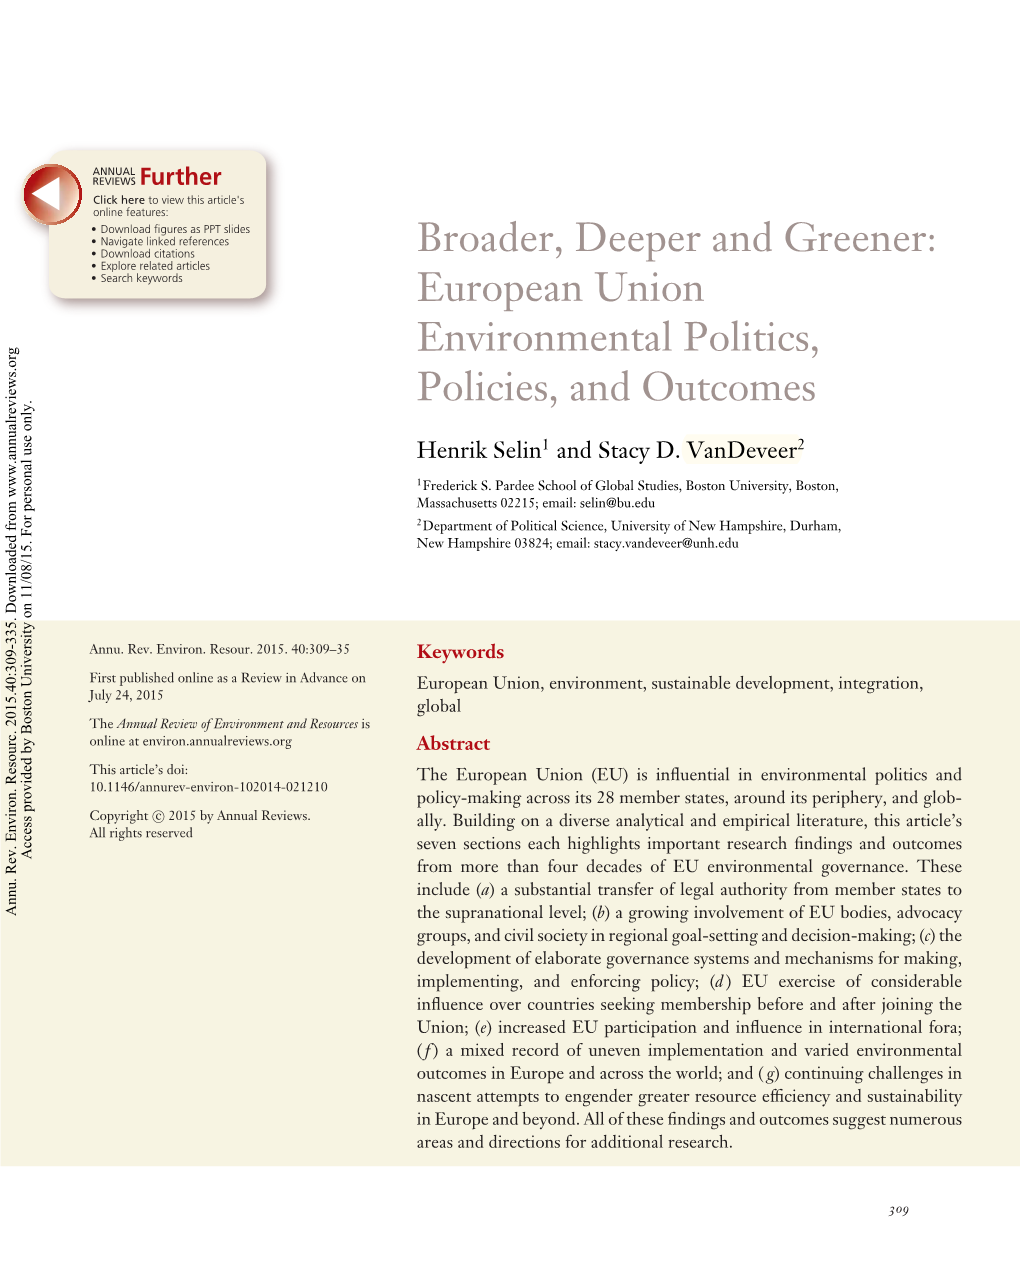 European Union Environmental Politics, Policies, and Outcomes